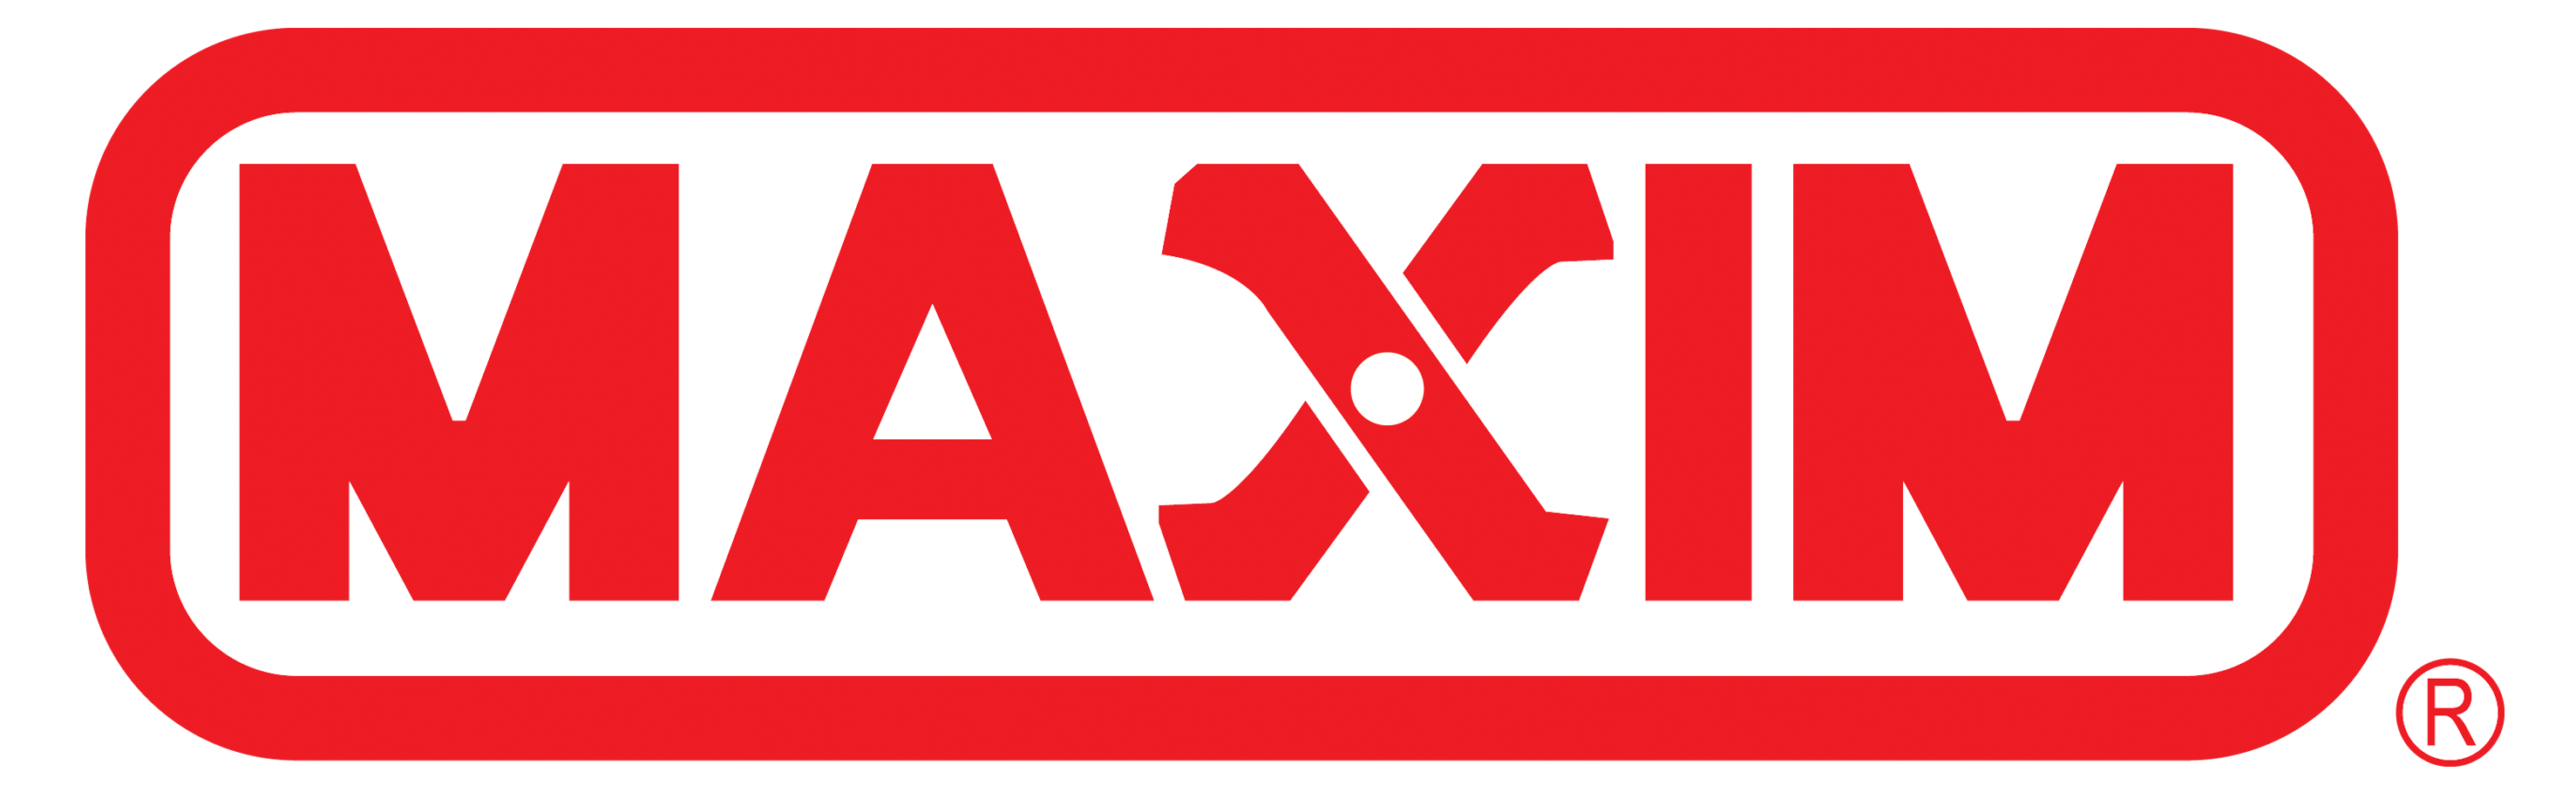 Maxim Logo - Tillers, Plows, Power Equipment at Maxim Manufacturing